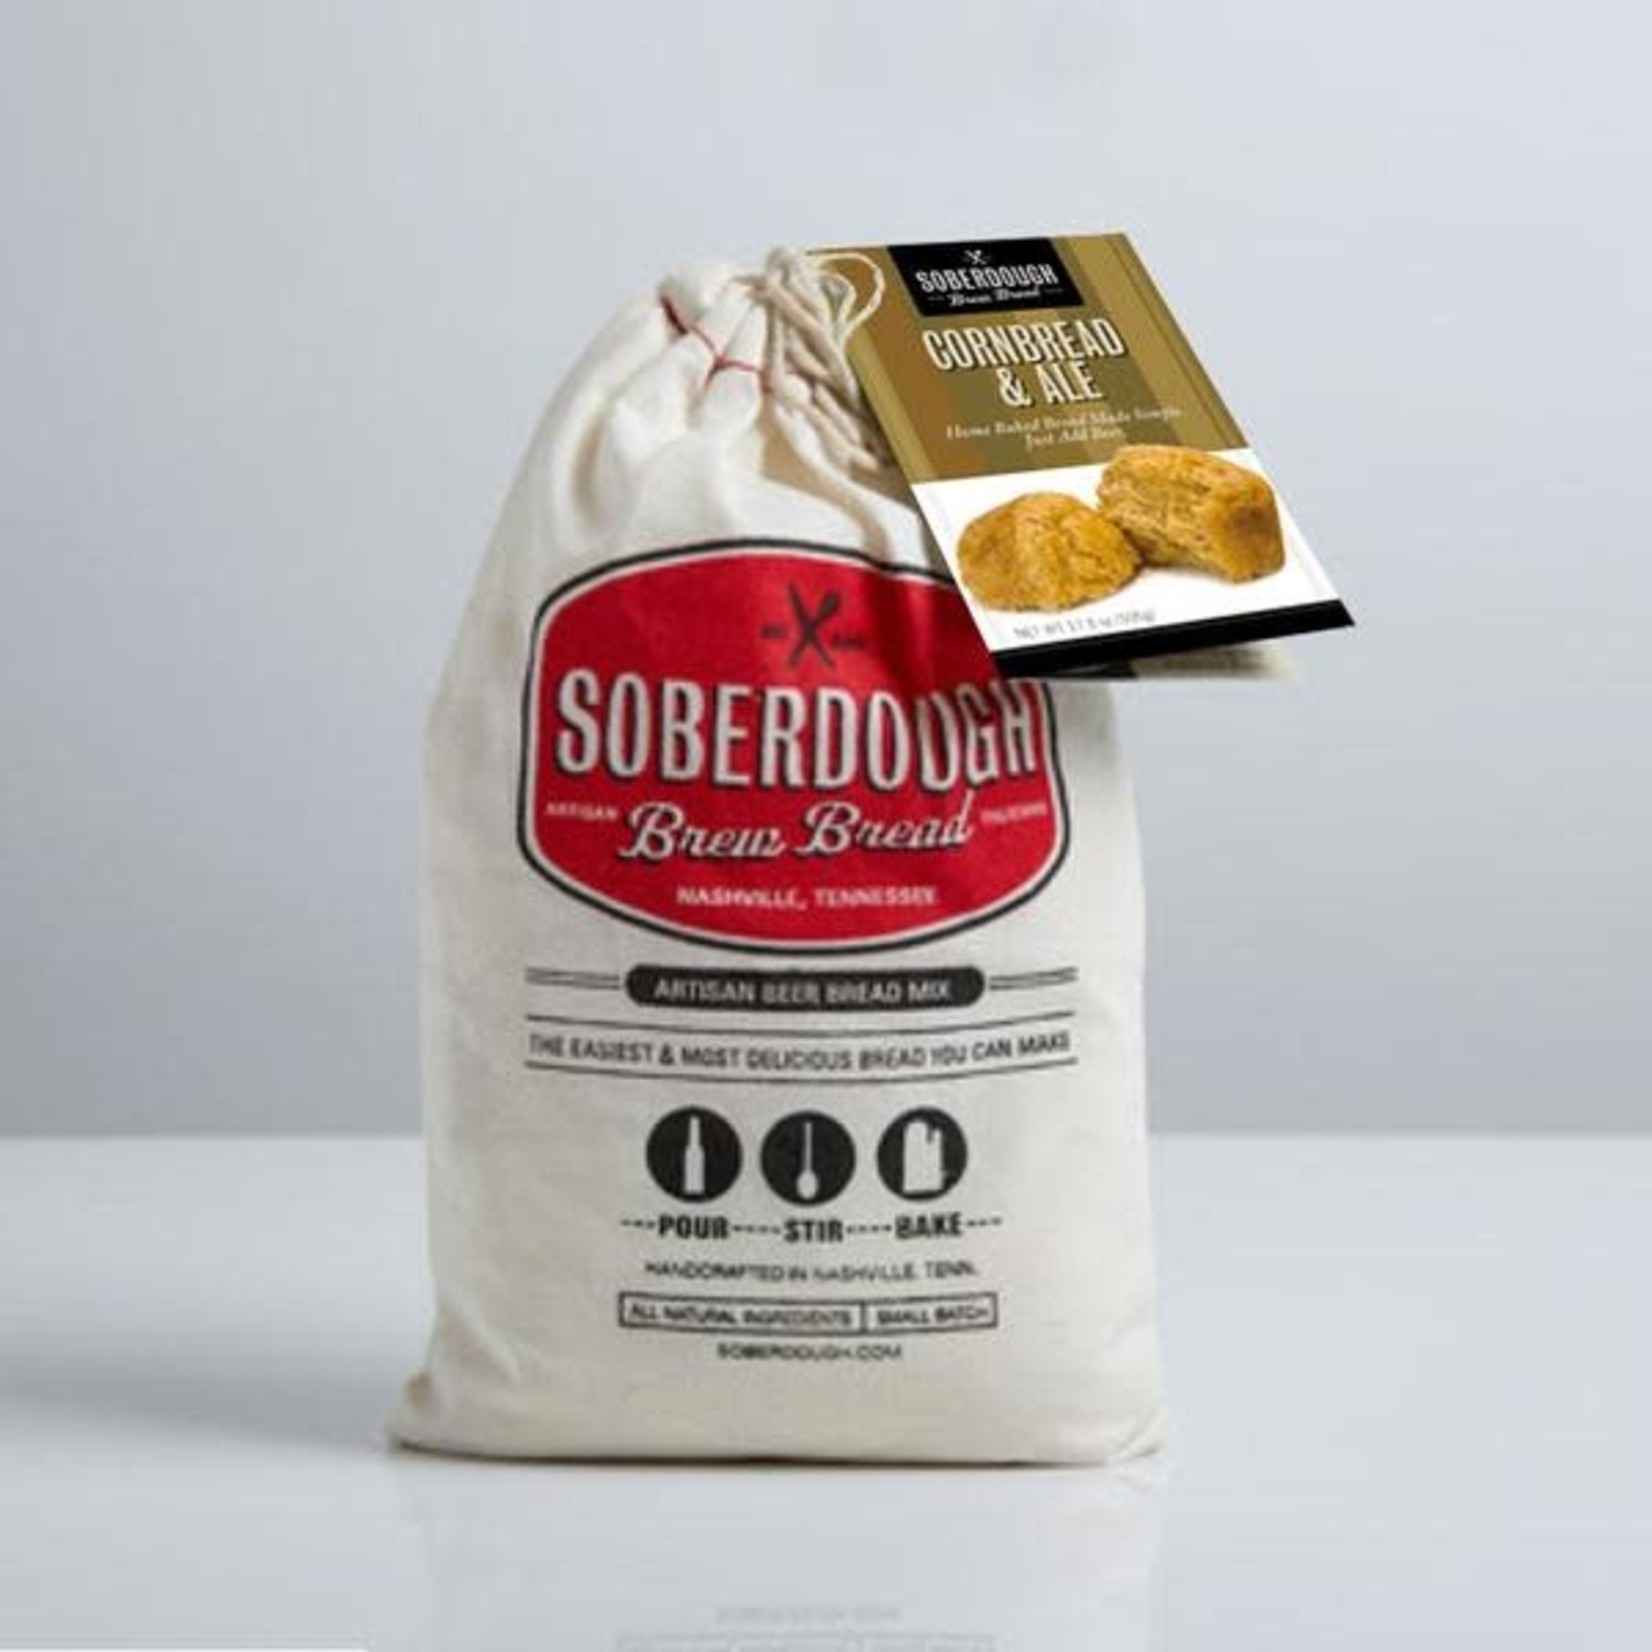 Soberdough Cornbread & Ale